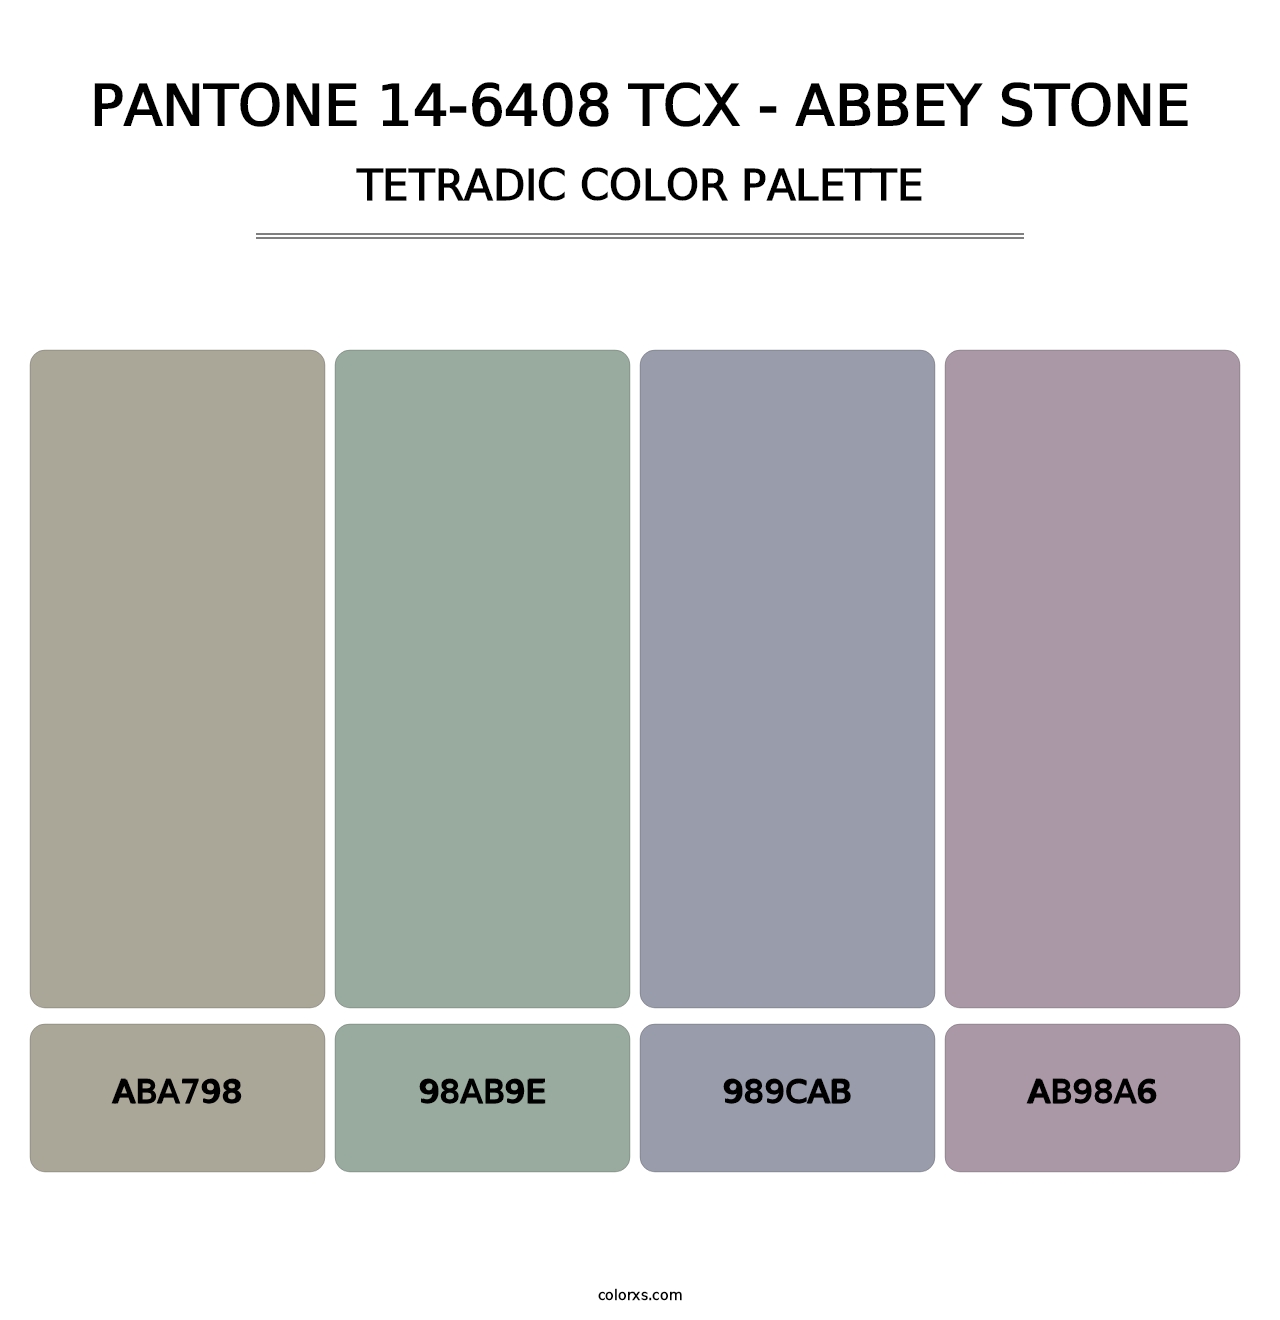 PANTONE 14-6408 TCX - Abbey Stone - Tetradic Color Palette